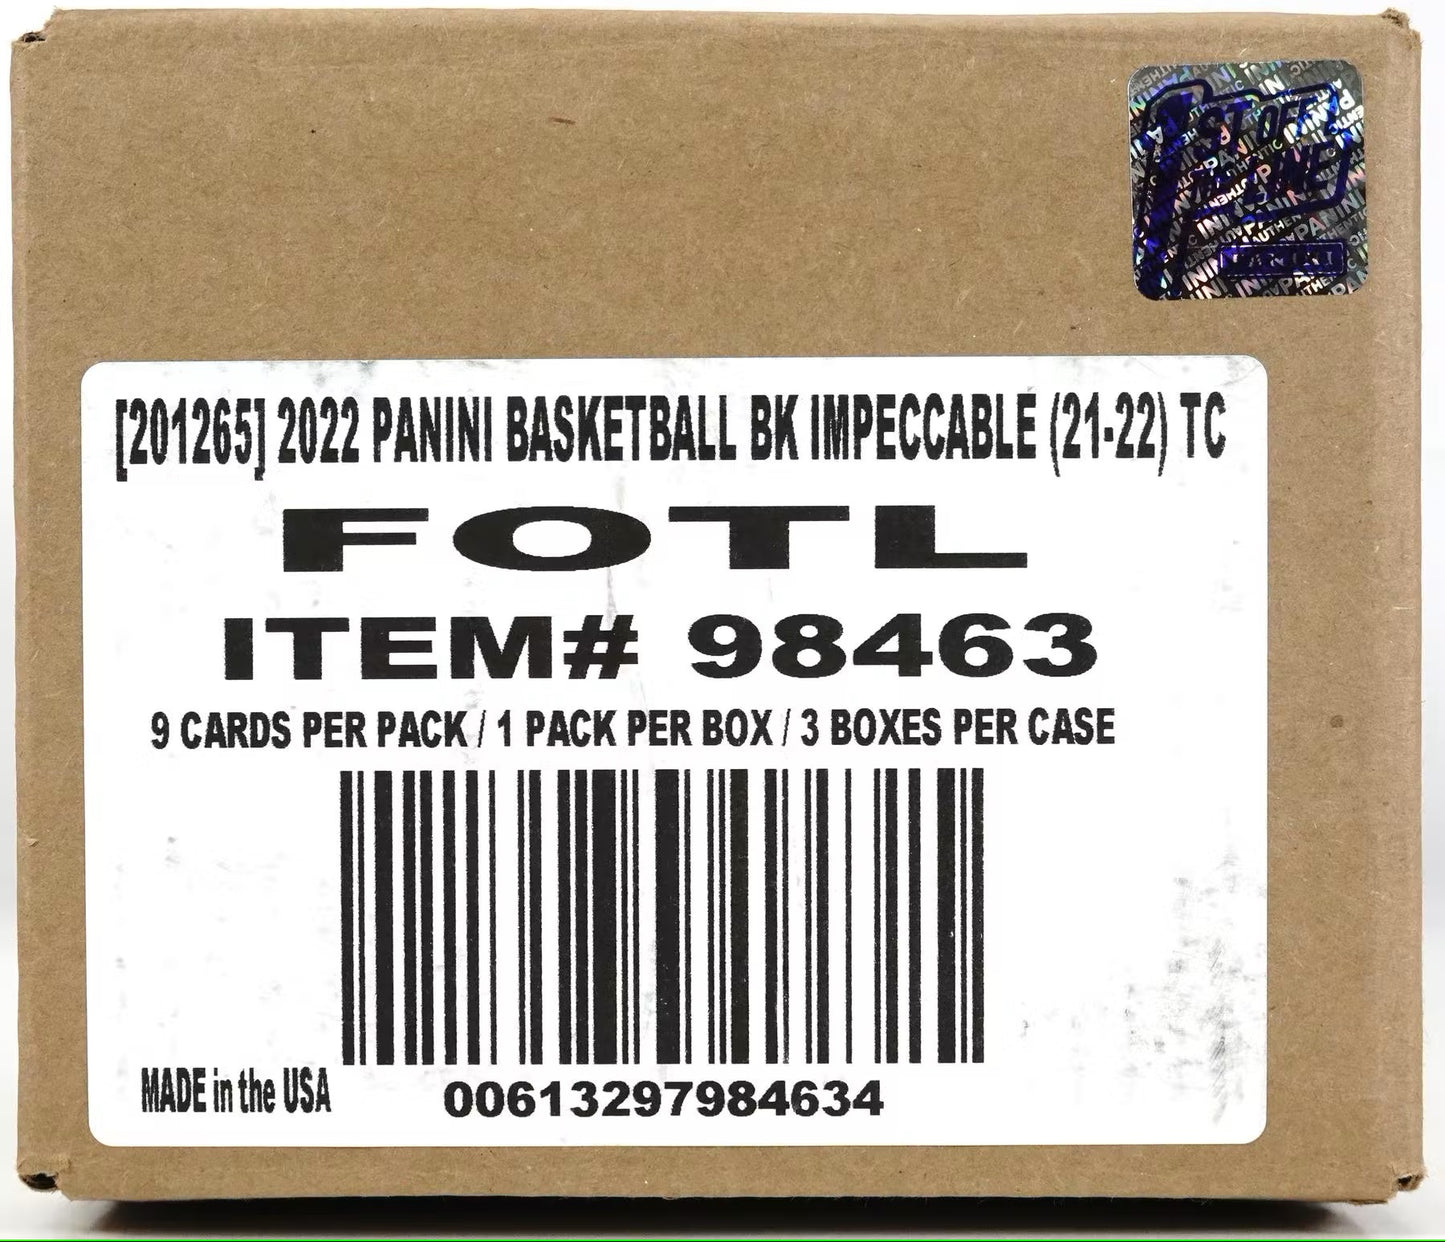 2021-22 Panini Impeccable Basketball FOTL Case